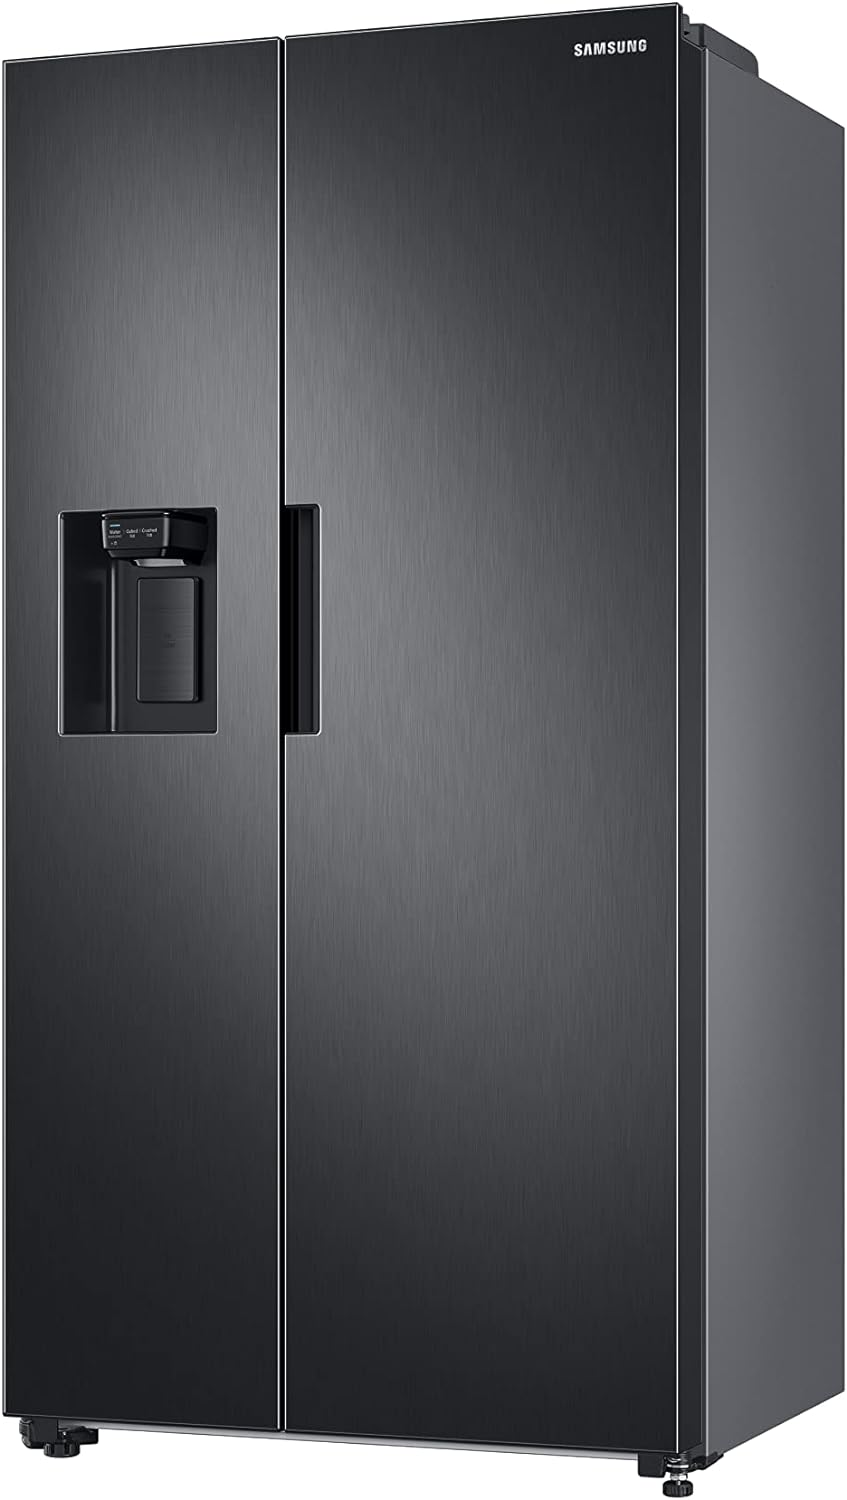 Samsung RS67A8810B1/EU Fridge Freezer RS8000 7 Series American Style Fridge Freezer with SpaceMax Technology, 409 Litre fridge, 225 Litre freezer - Amazing Gadgets Outlet